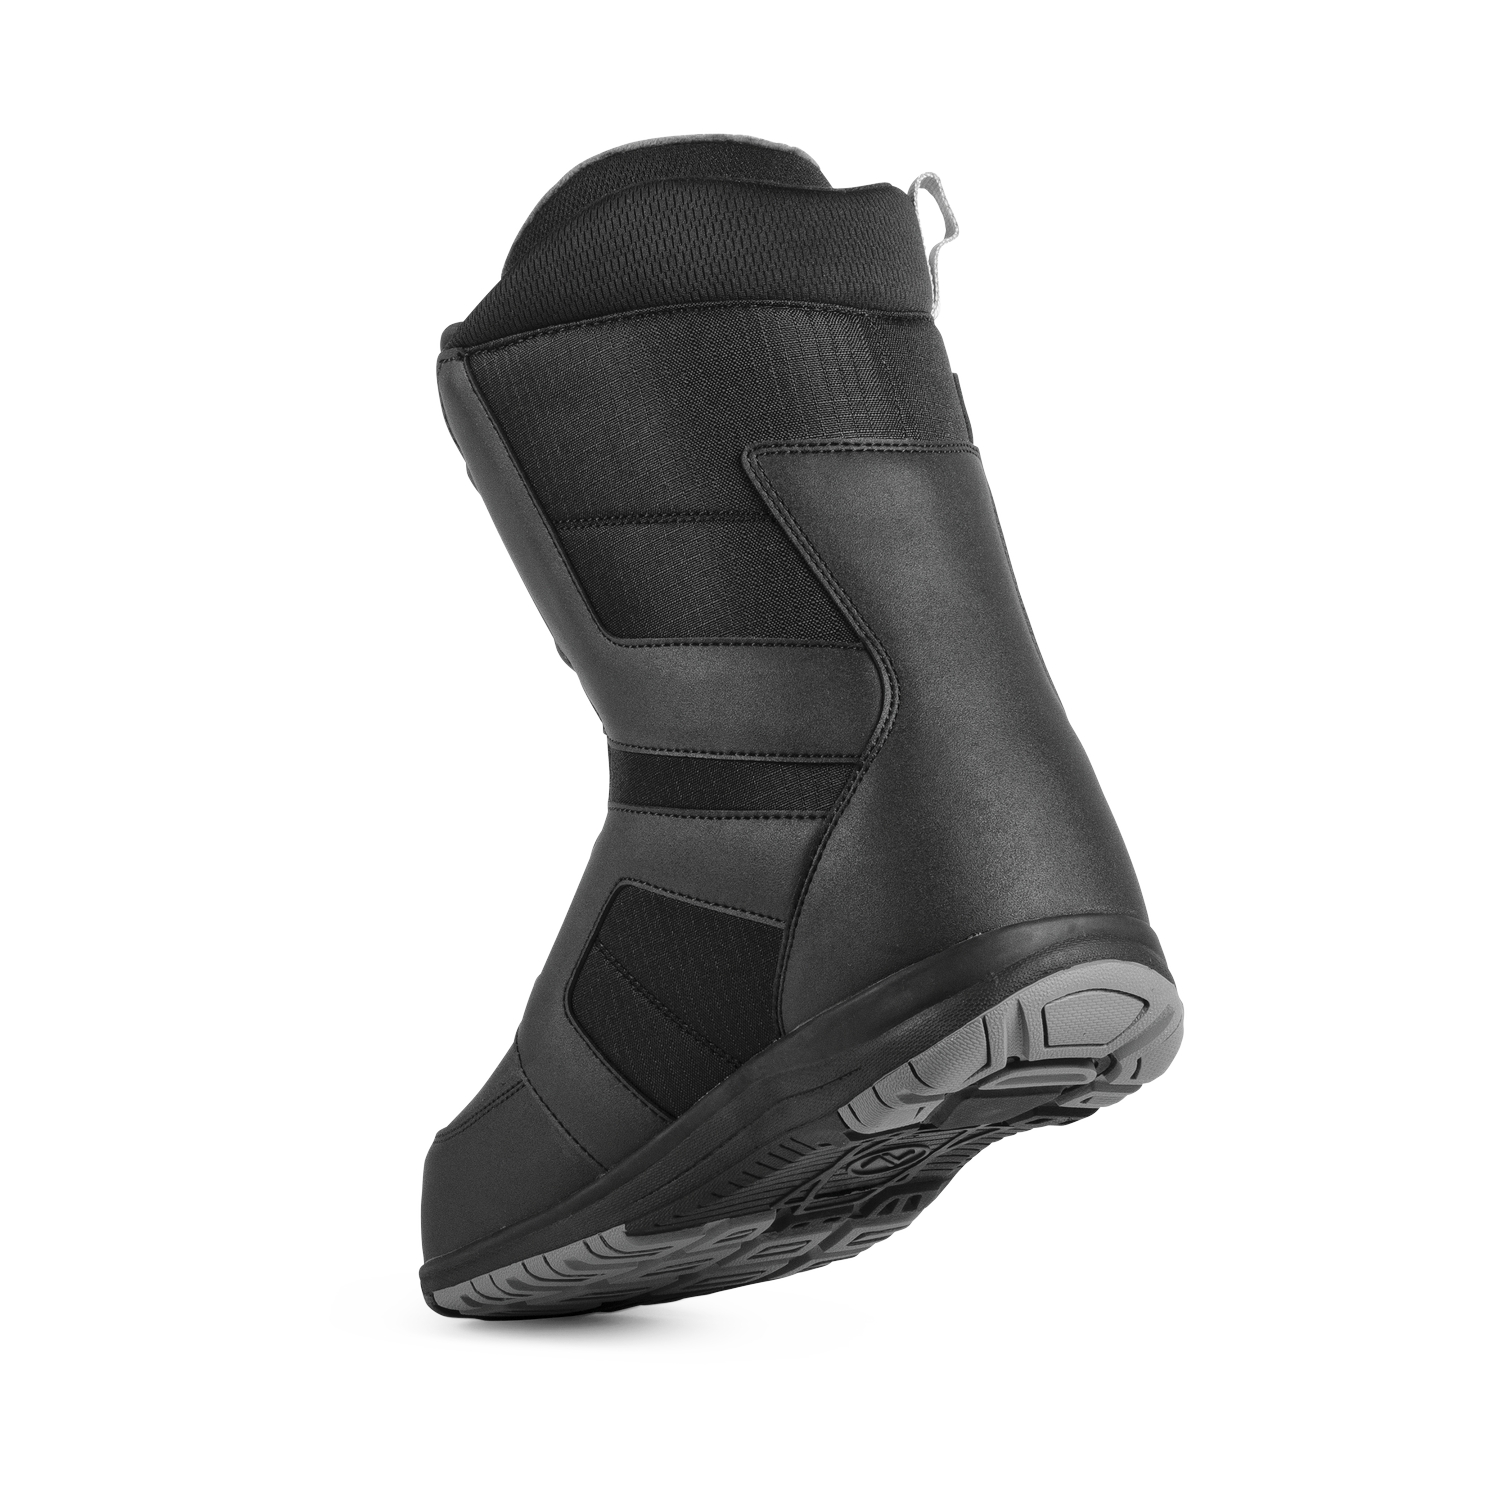 Ботинки для сноуборда NIDECKER 2018-19 Ranger Boa Black